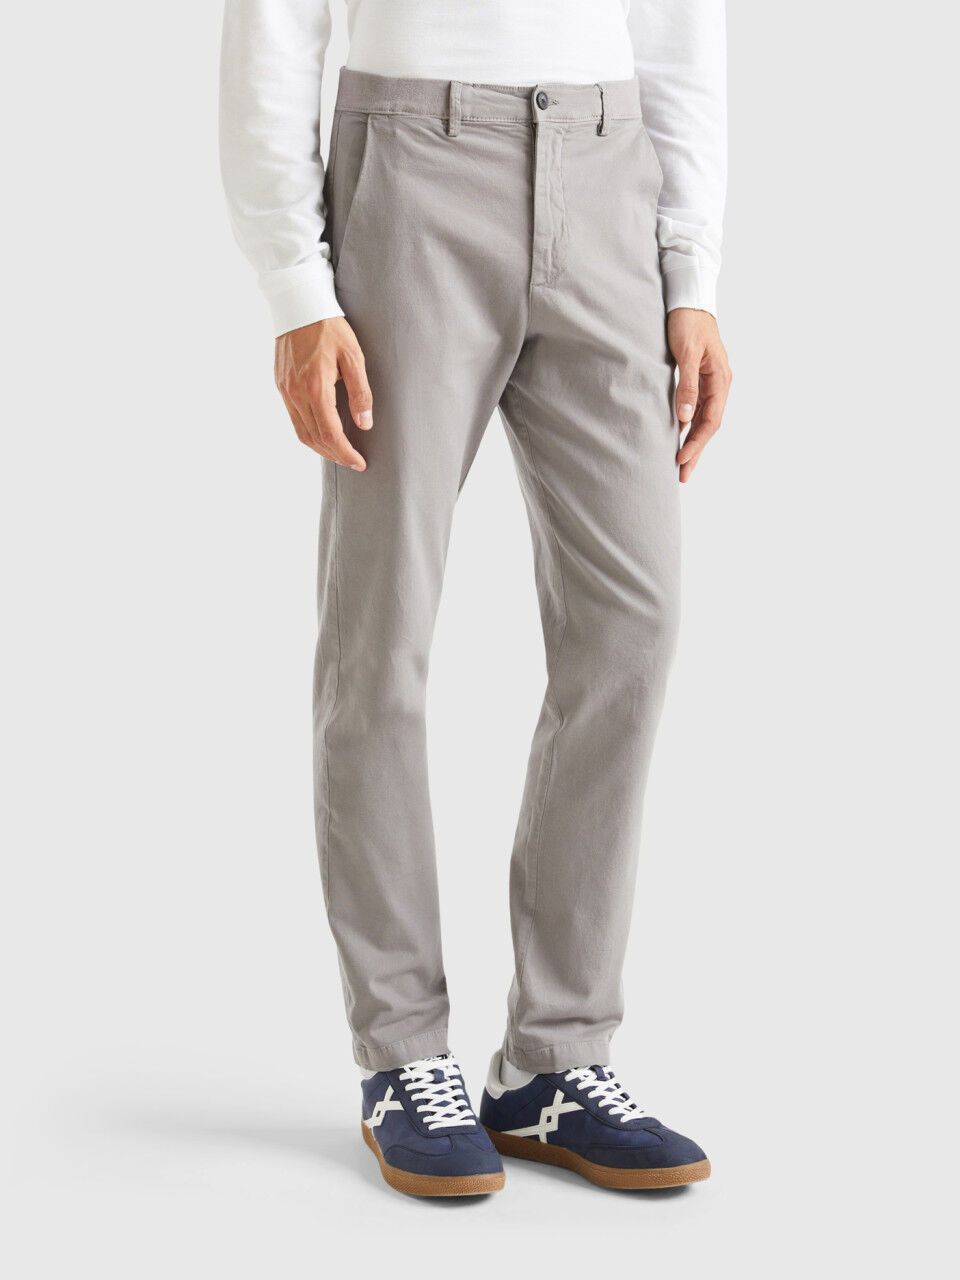 Juebong Mens Pants Cargo Joggers Sweatpants Elastic Waist Button Pant Loose  Fit Chino Trousers with PocketsYellowXXXL  Walmartcom